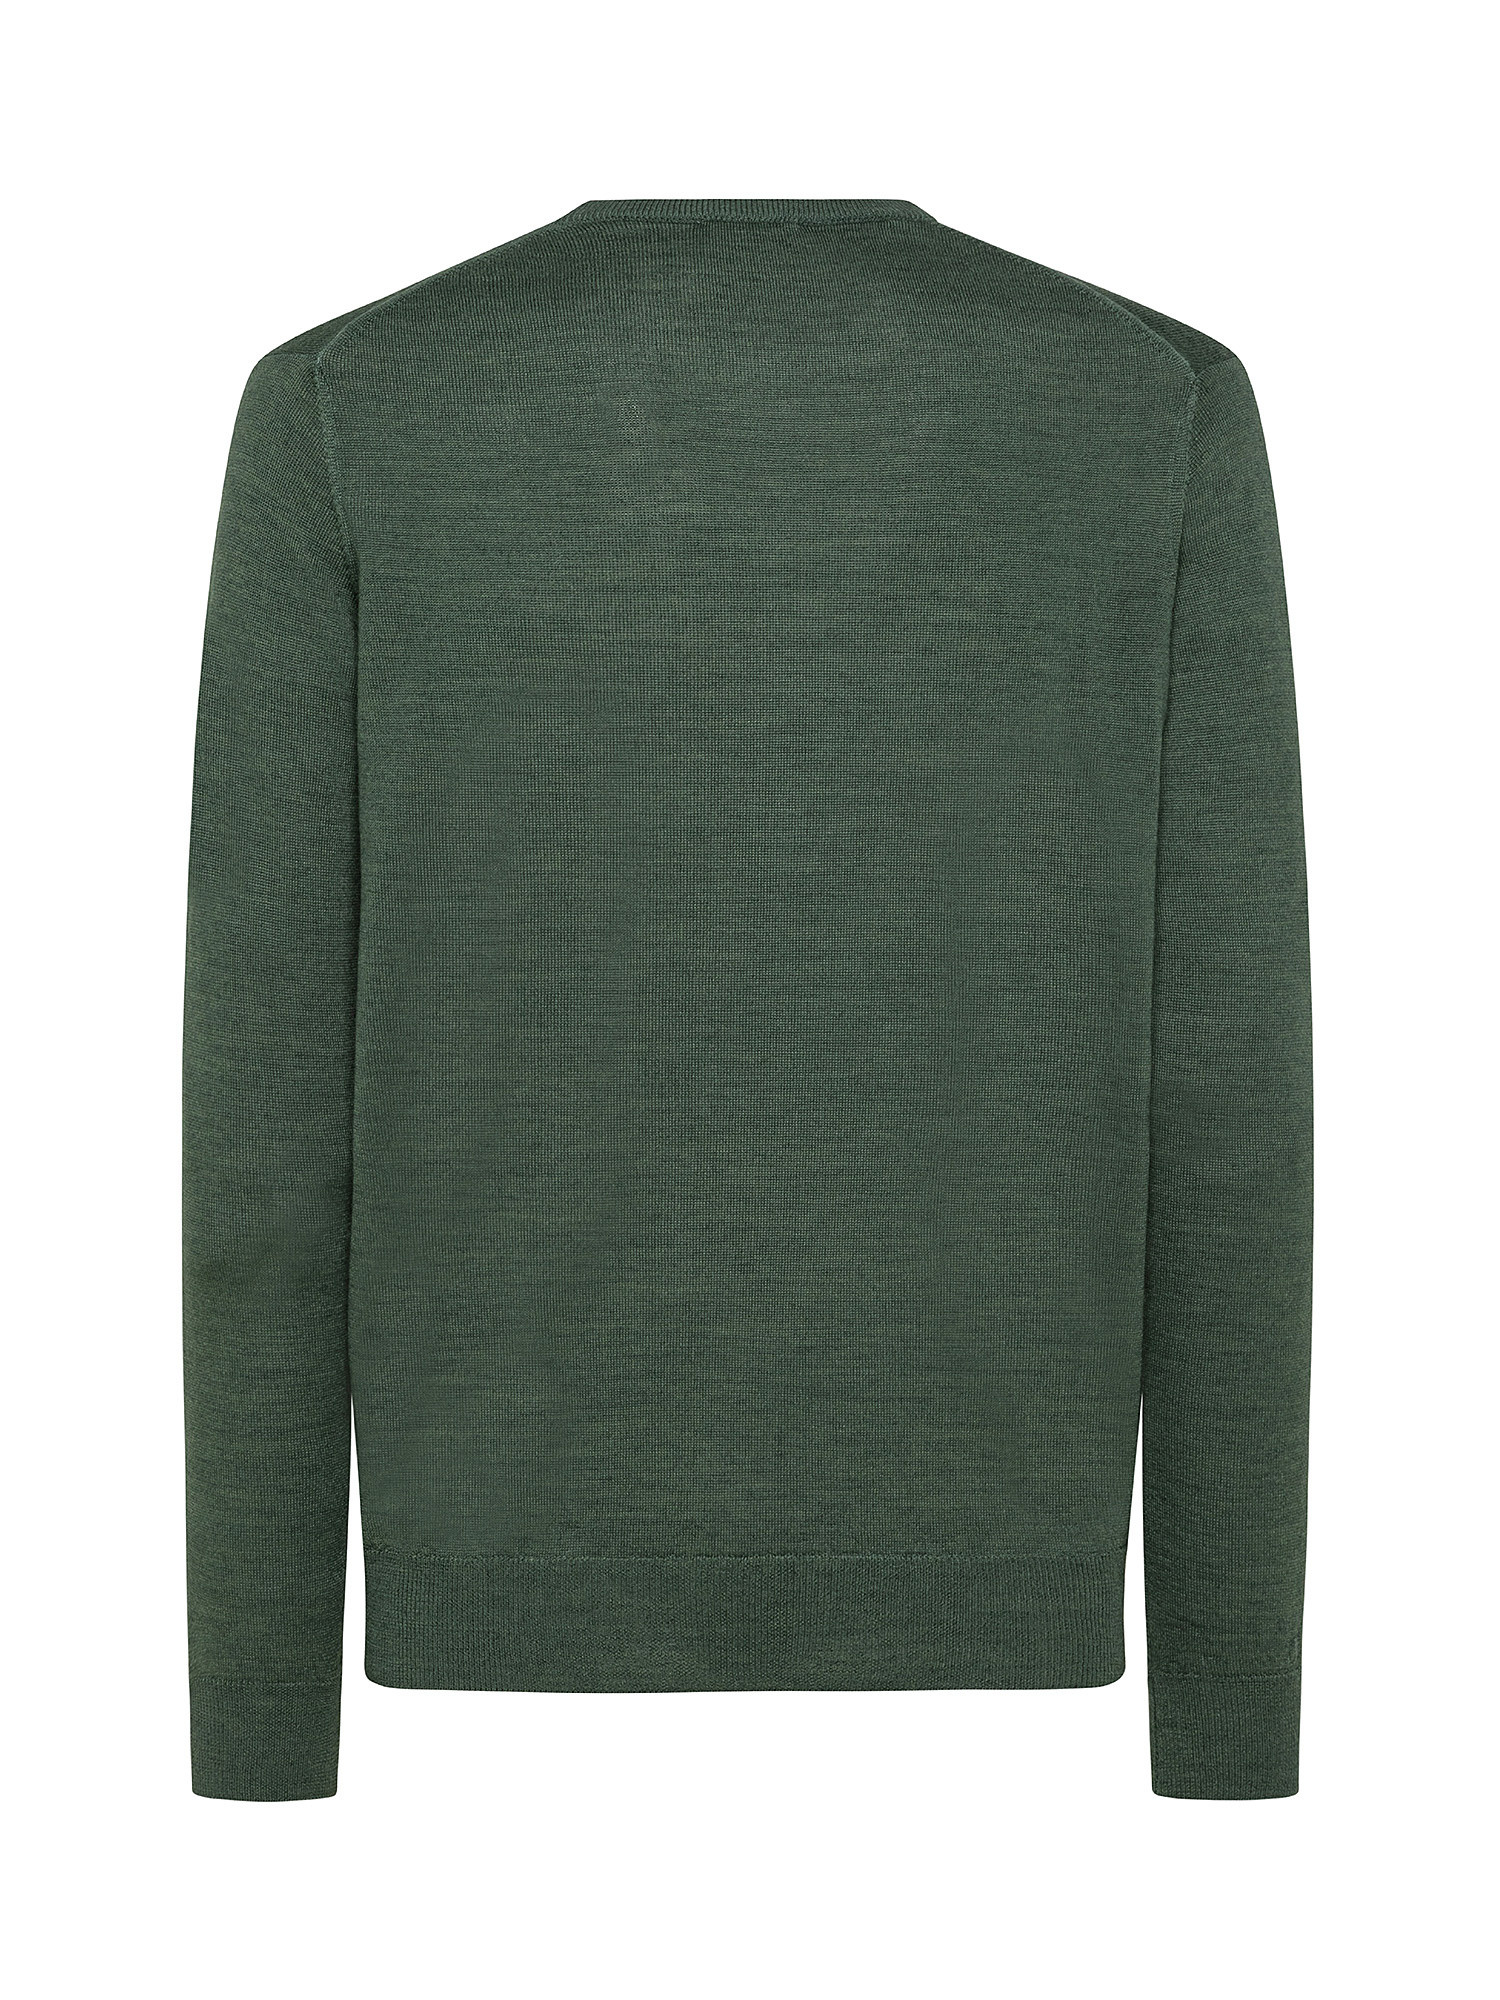 Merino Blend crewneck sweater - Machine washable, Green, large image number 1